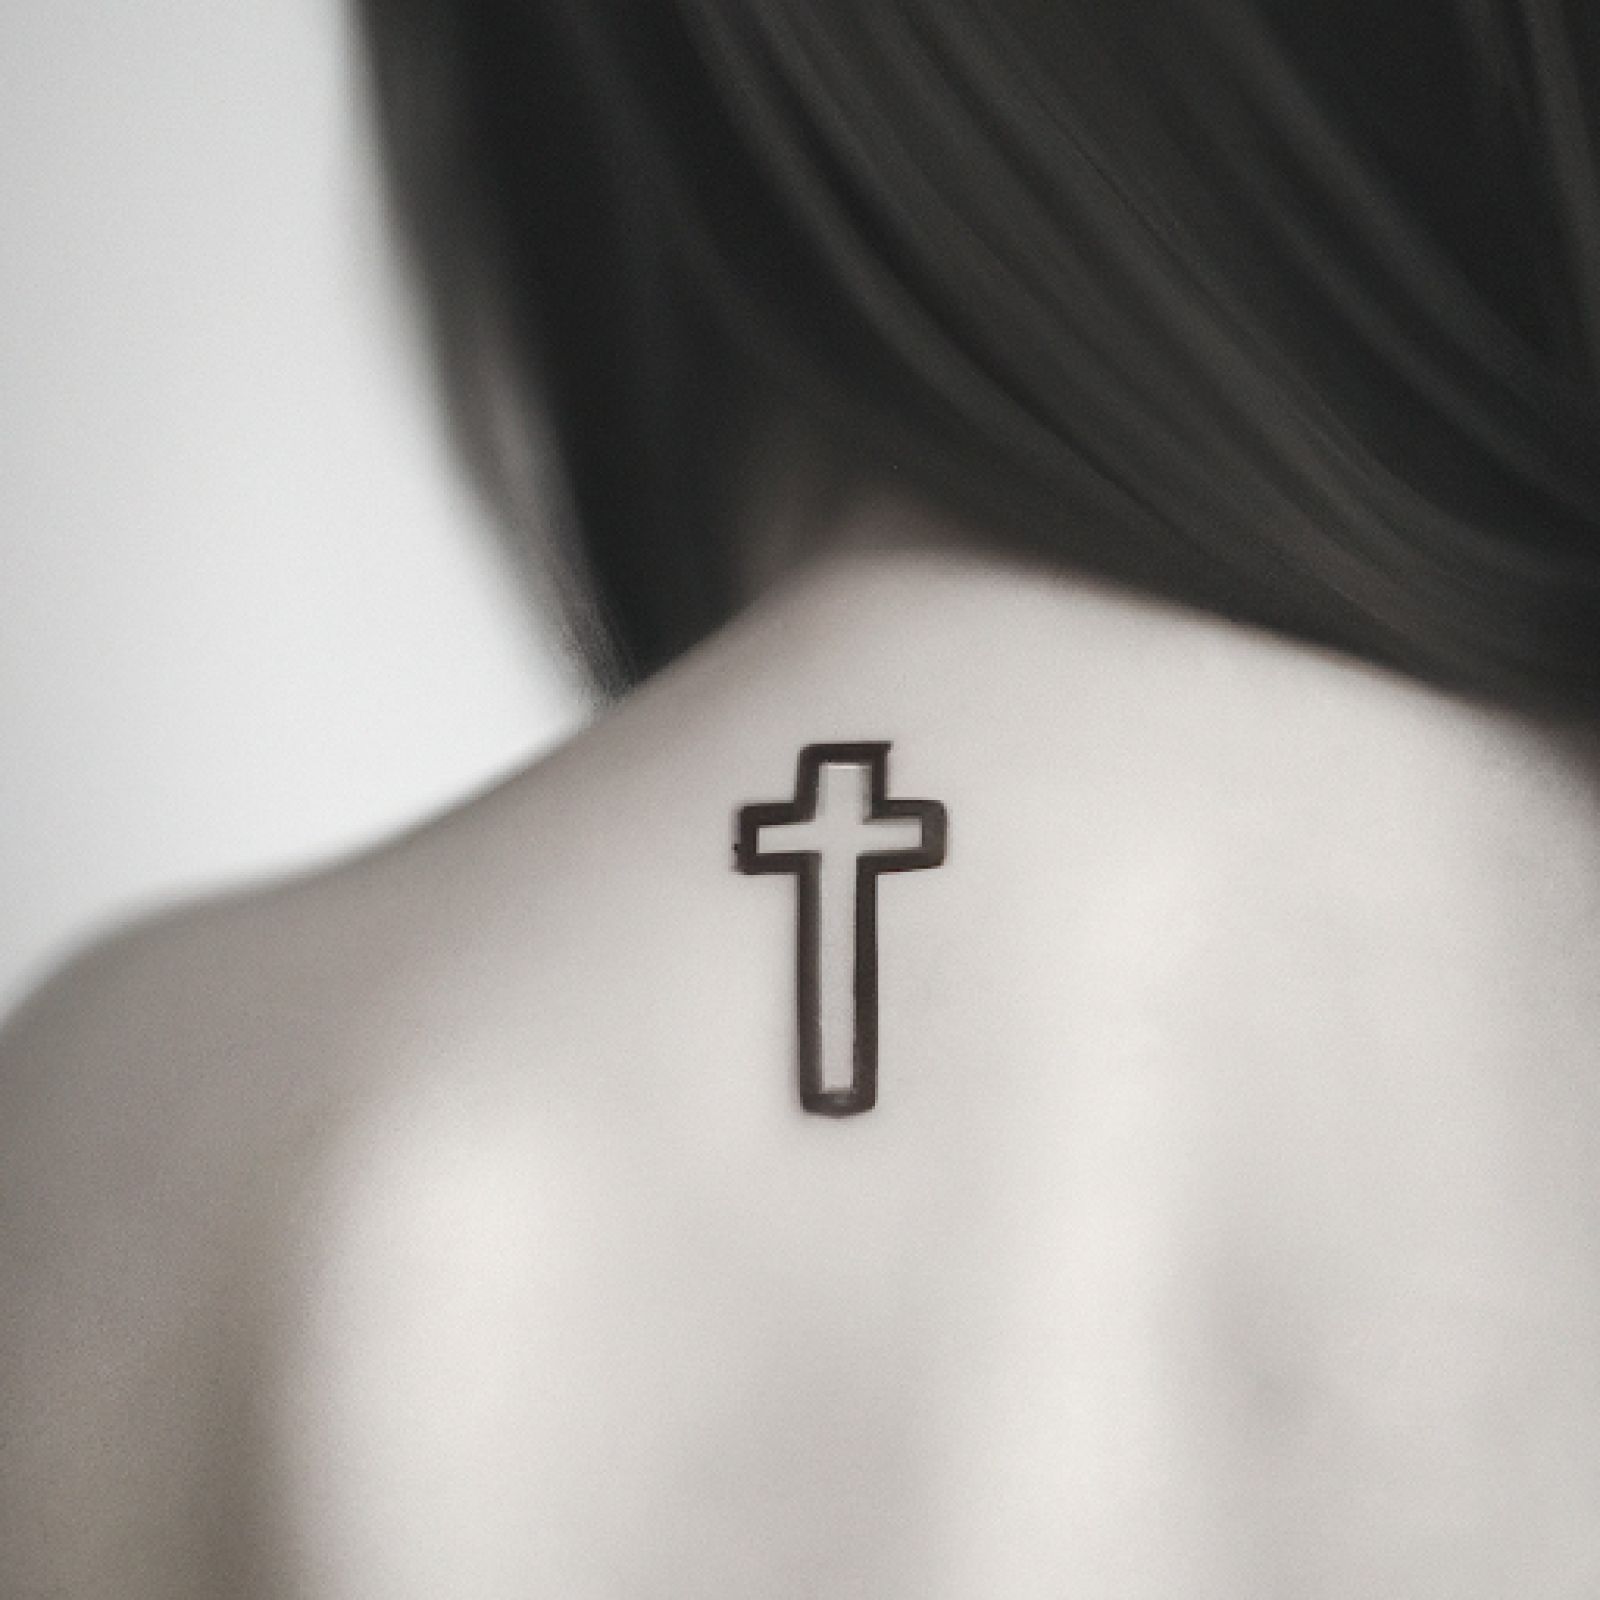 Jesus tattoo on shoulder for women